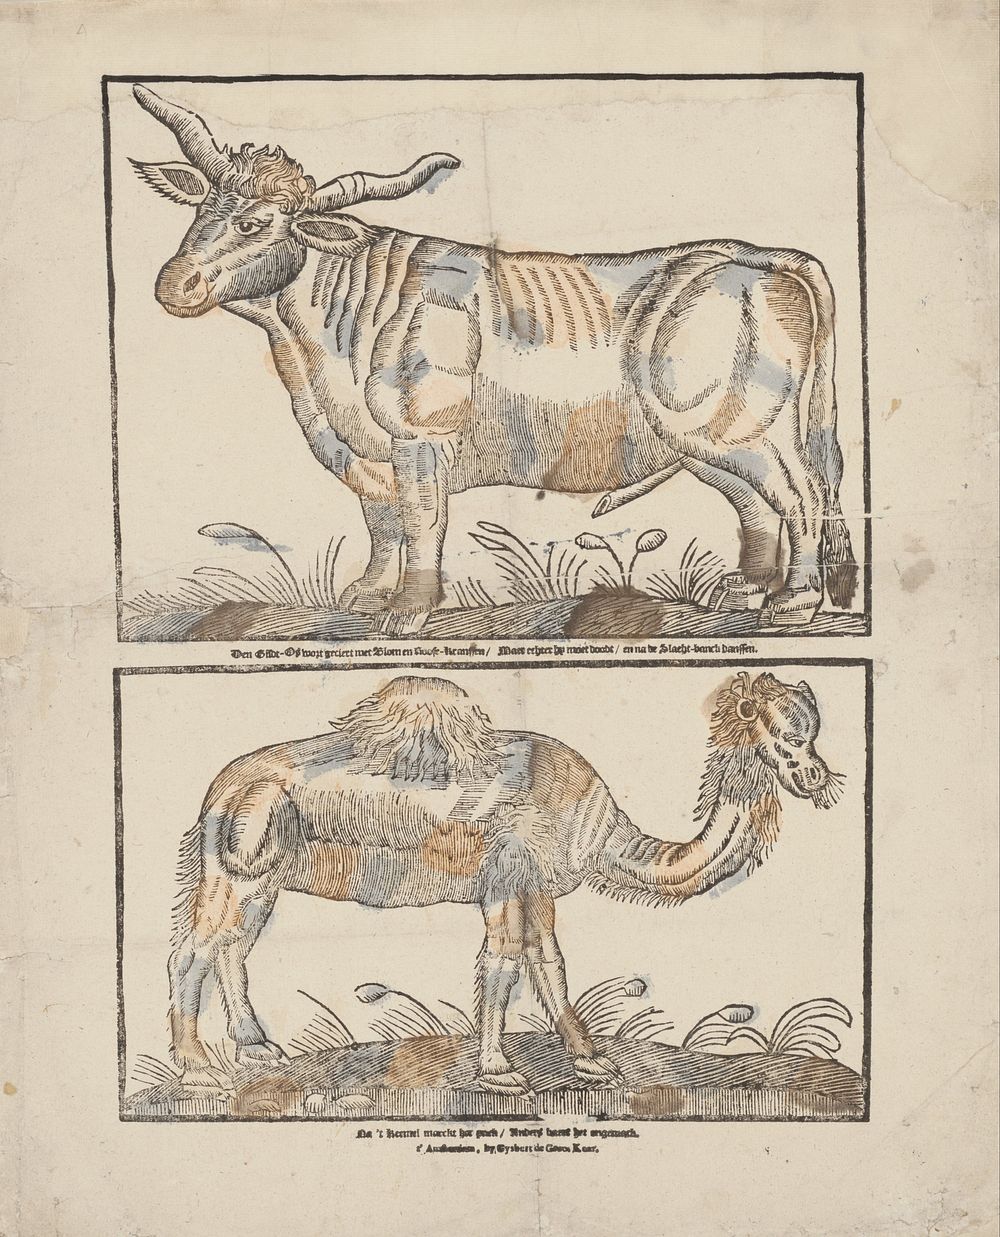 Os en kameel (1738 - 1767) by Gijsbert de Groot Keur and anonymous